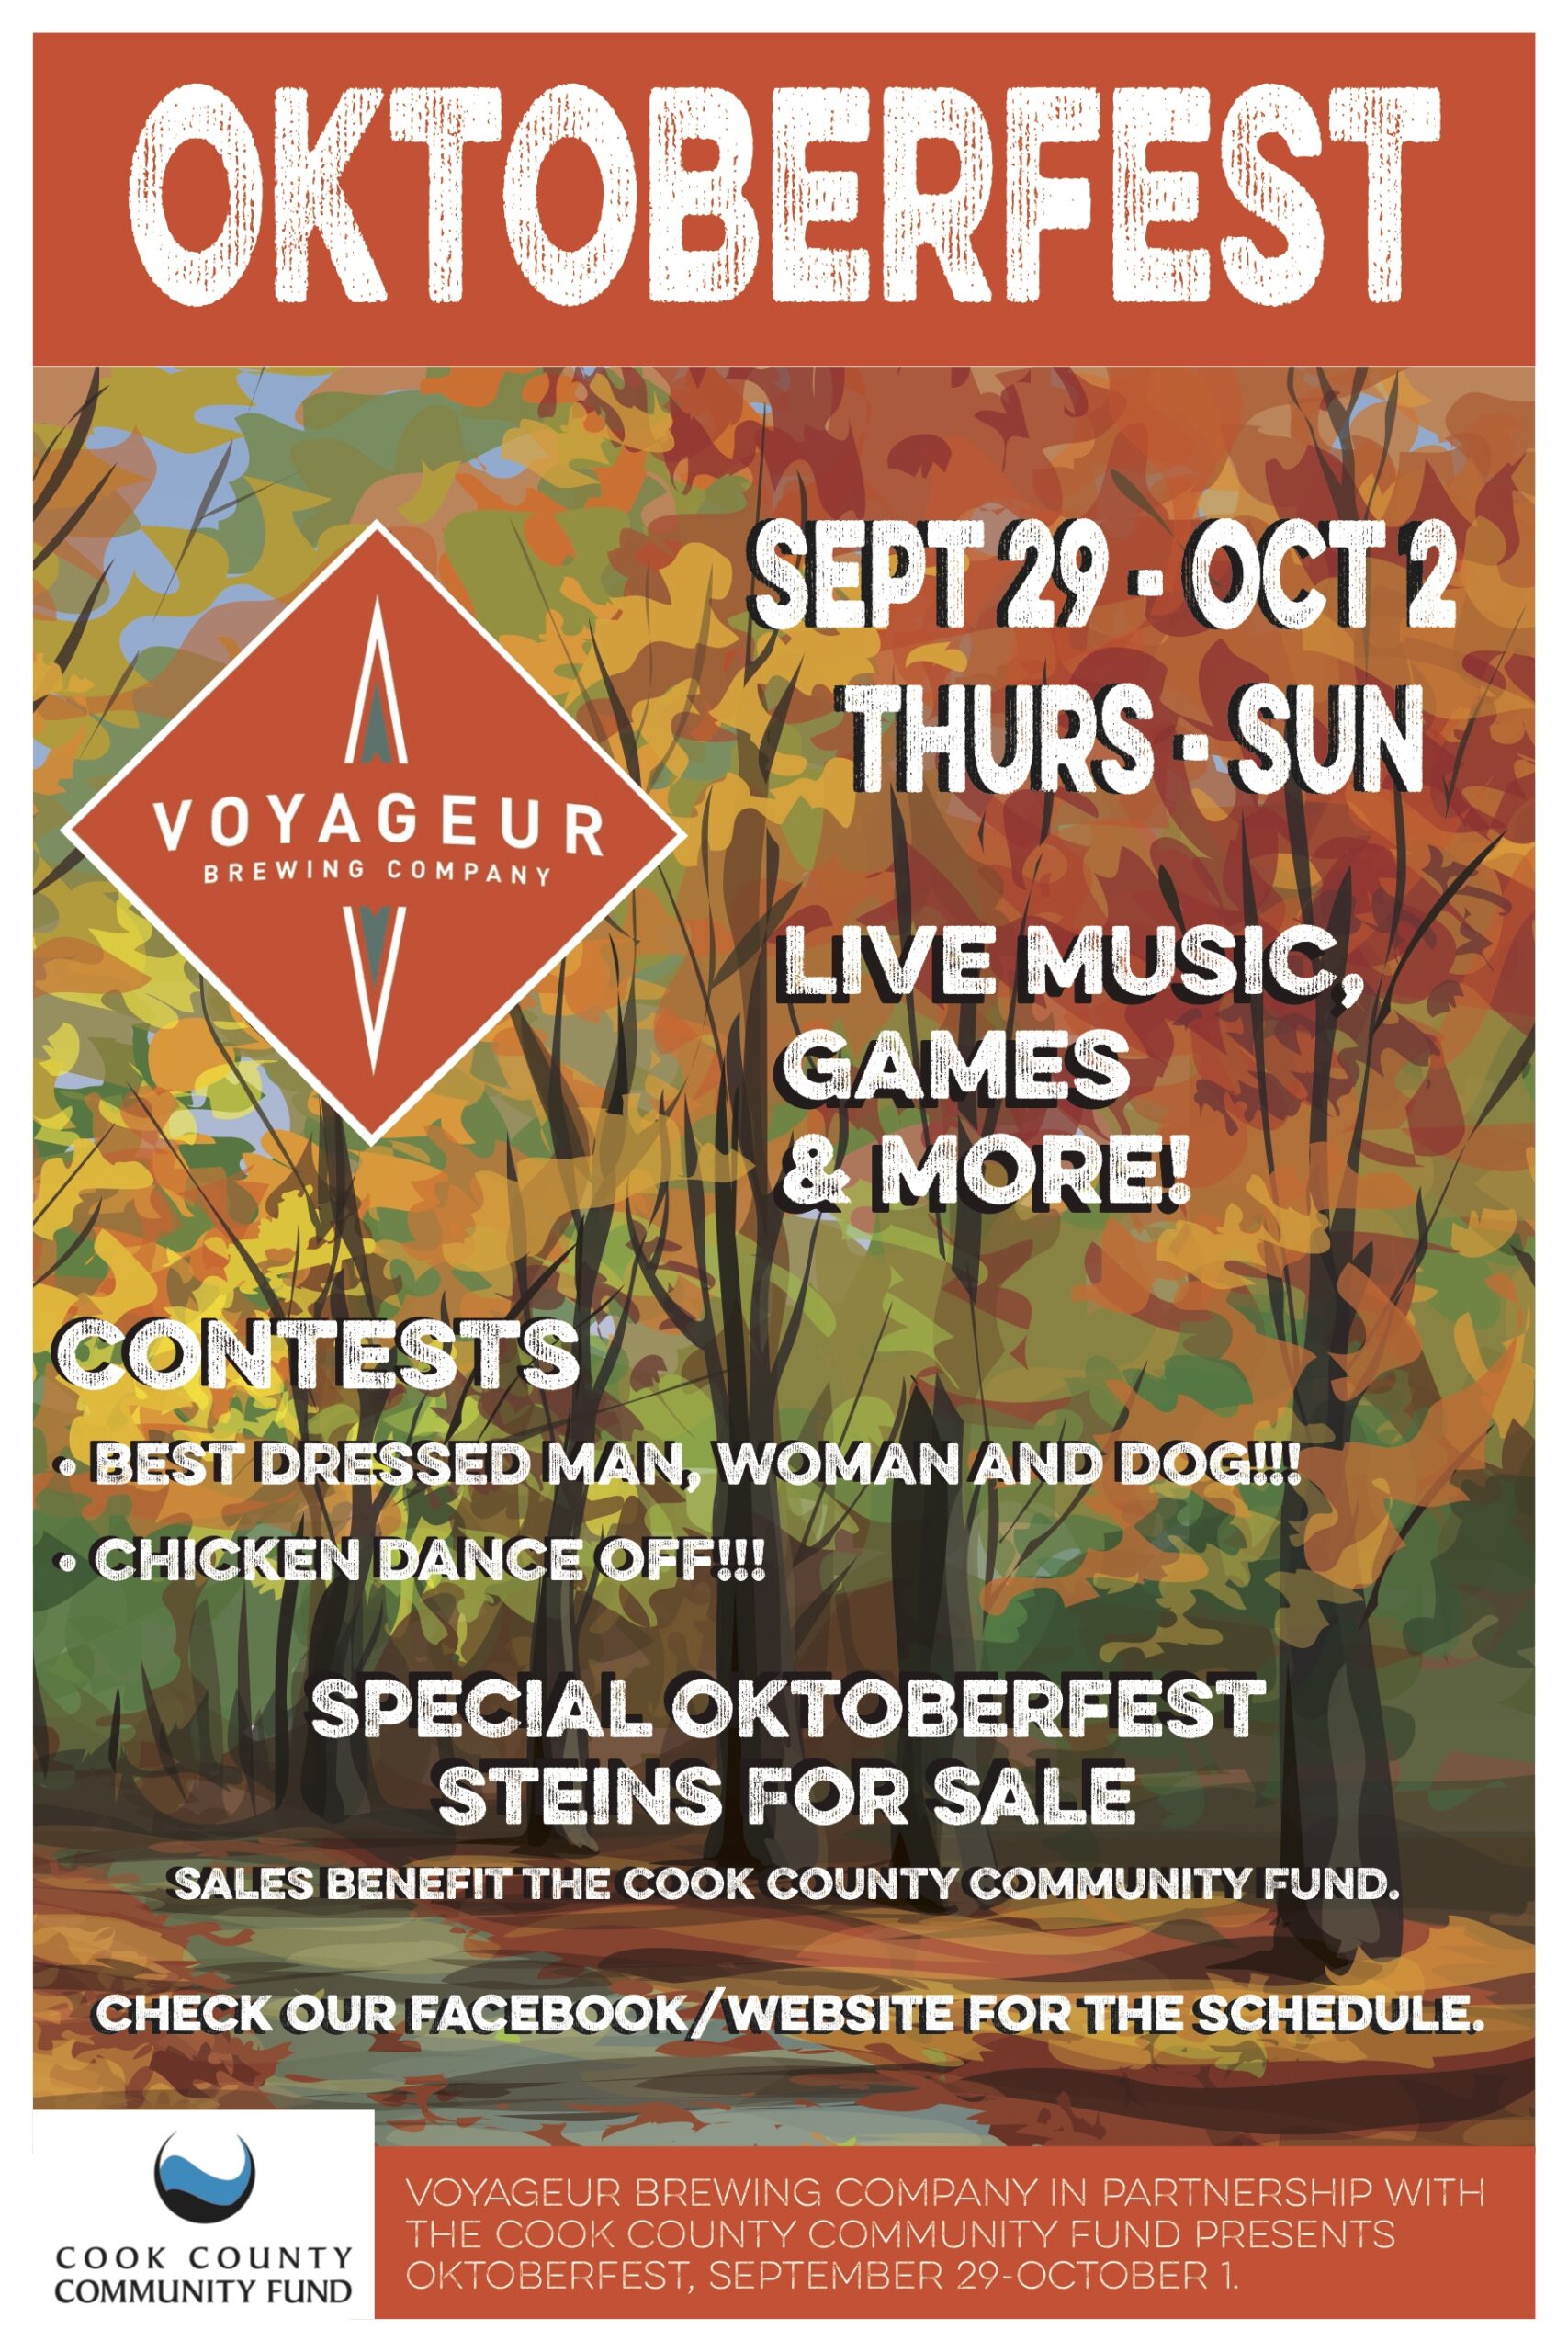 Voyageur holds Oktoberfest